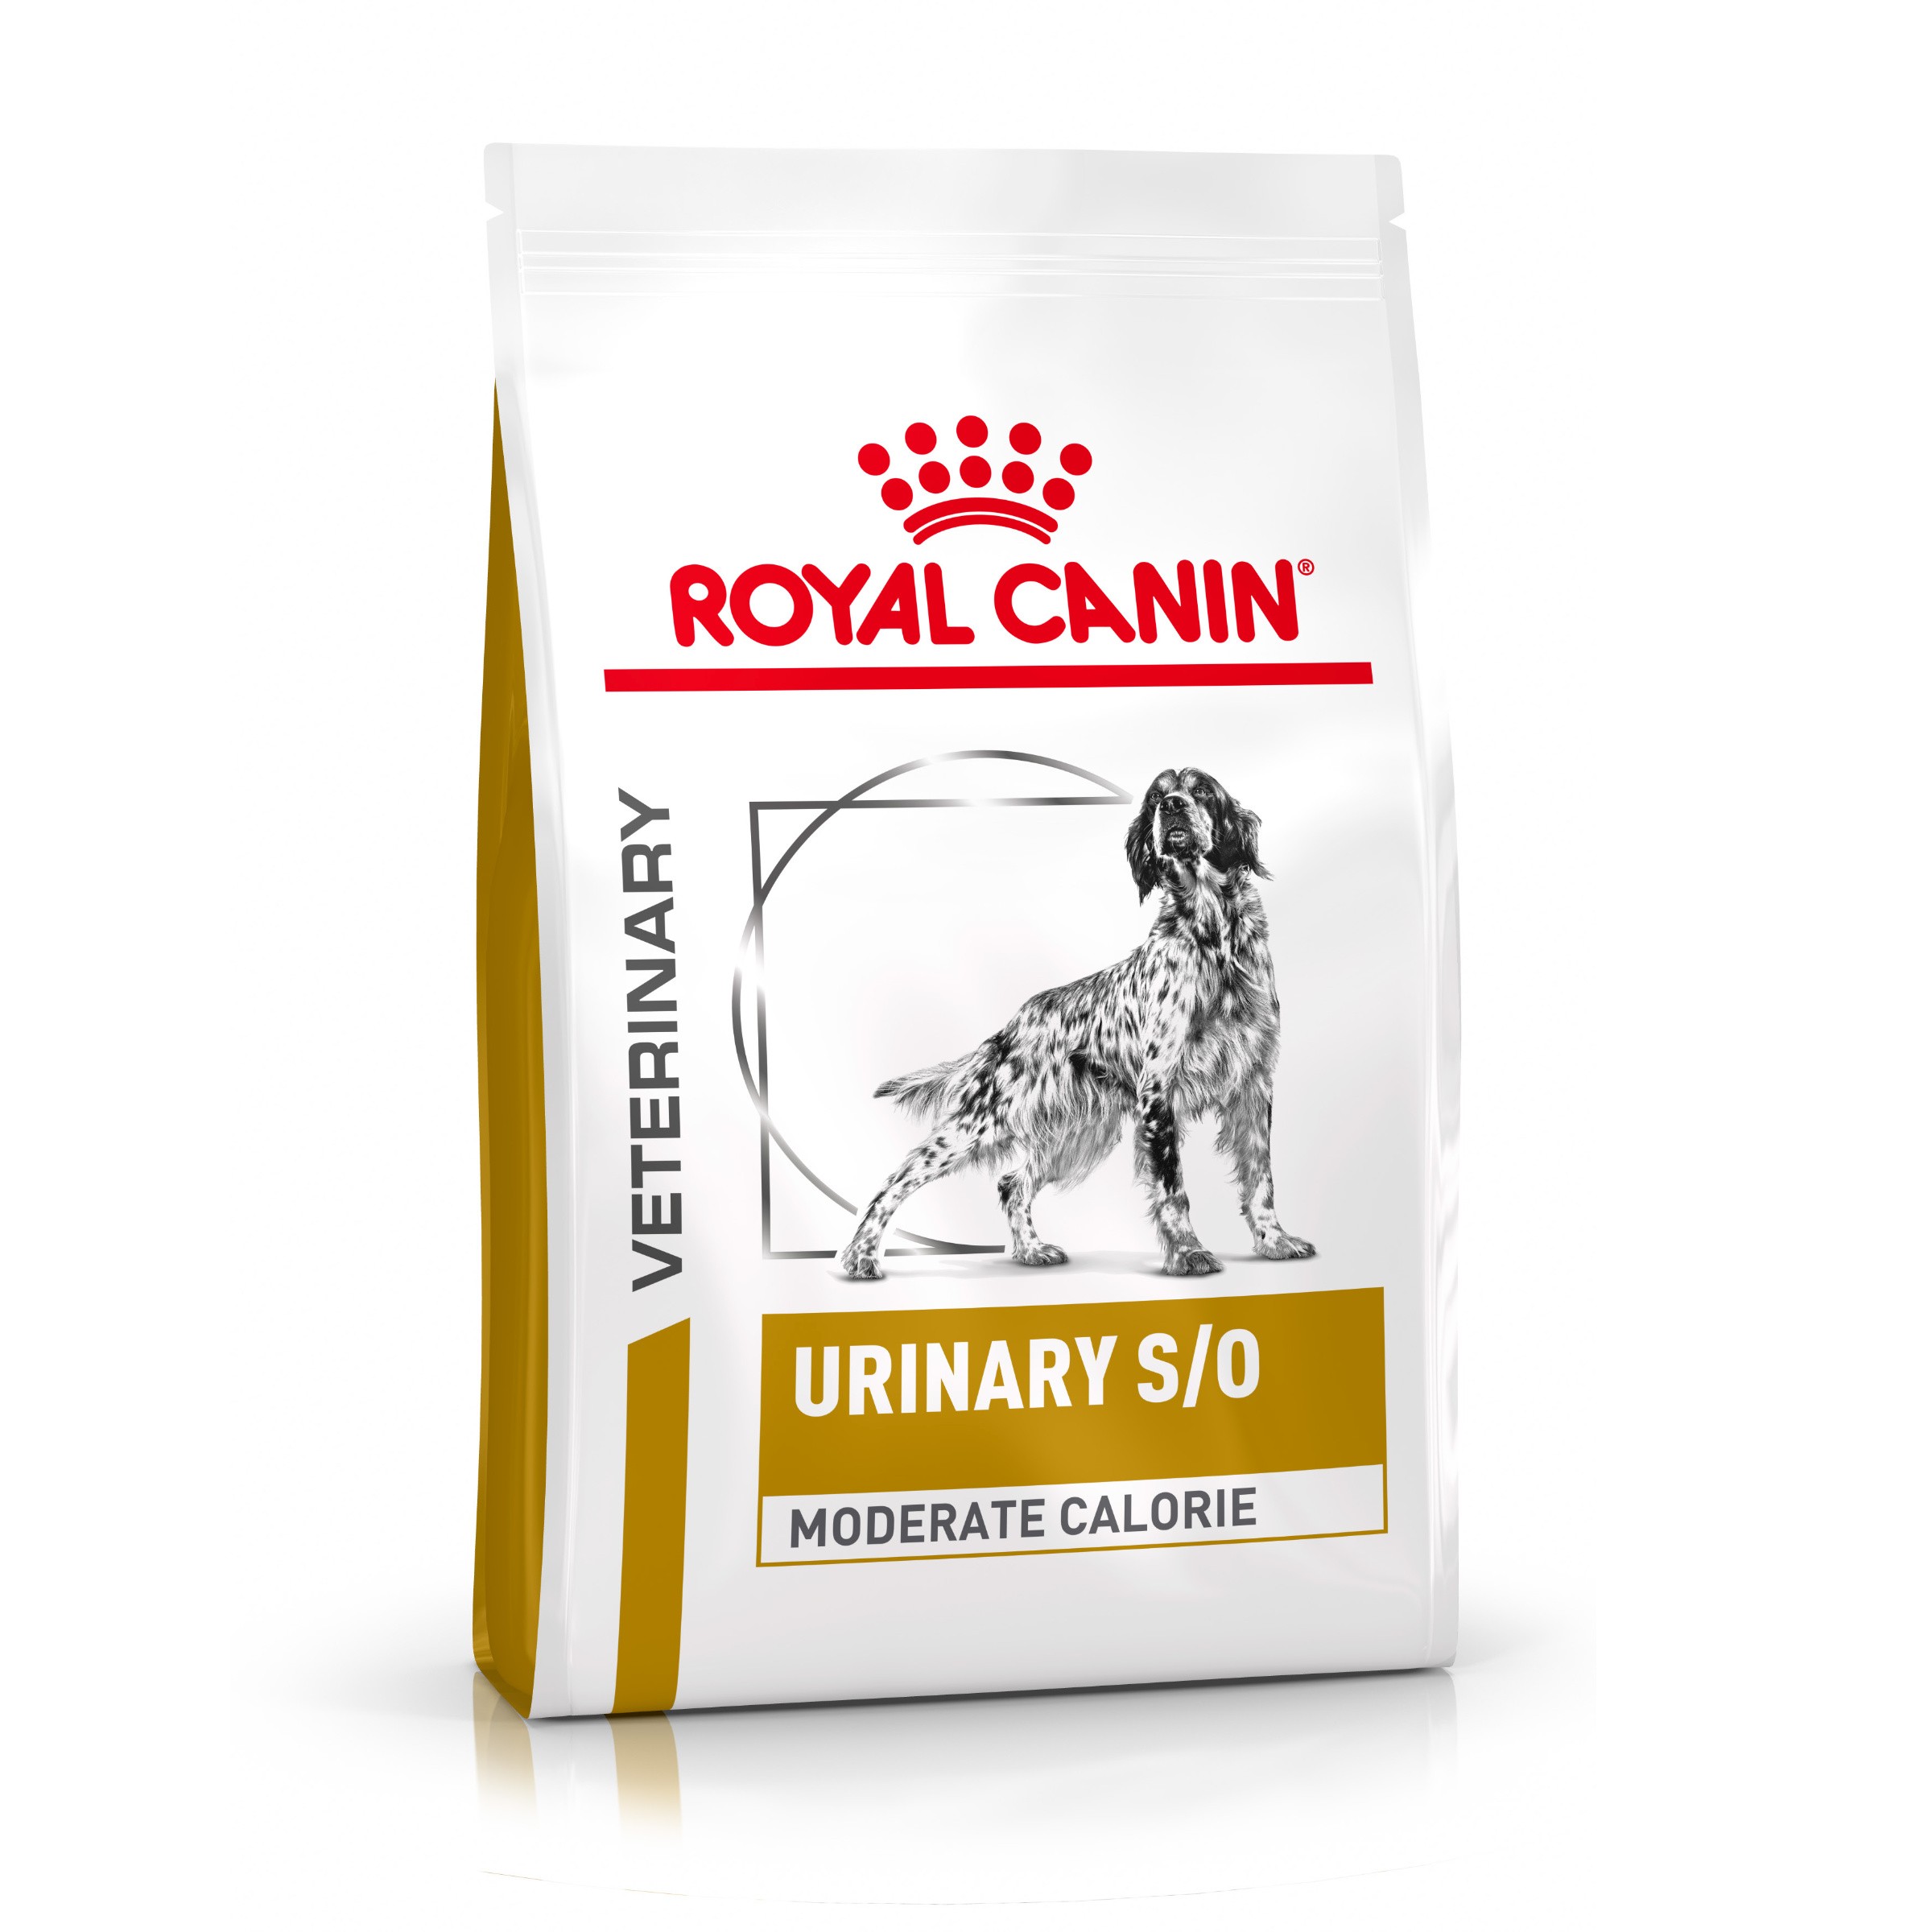 Royal Canin Urinary S/O Moderate Calorie hondenvoer